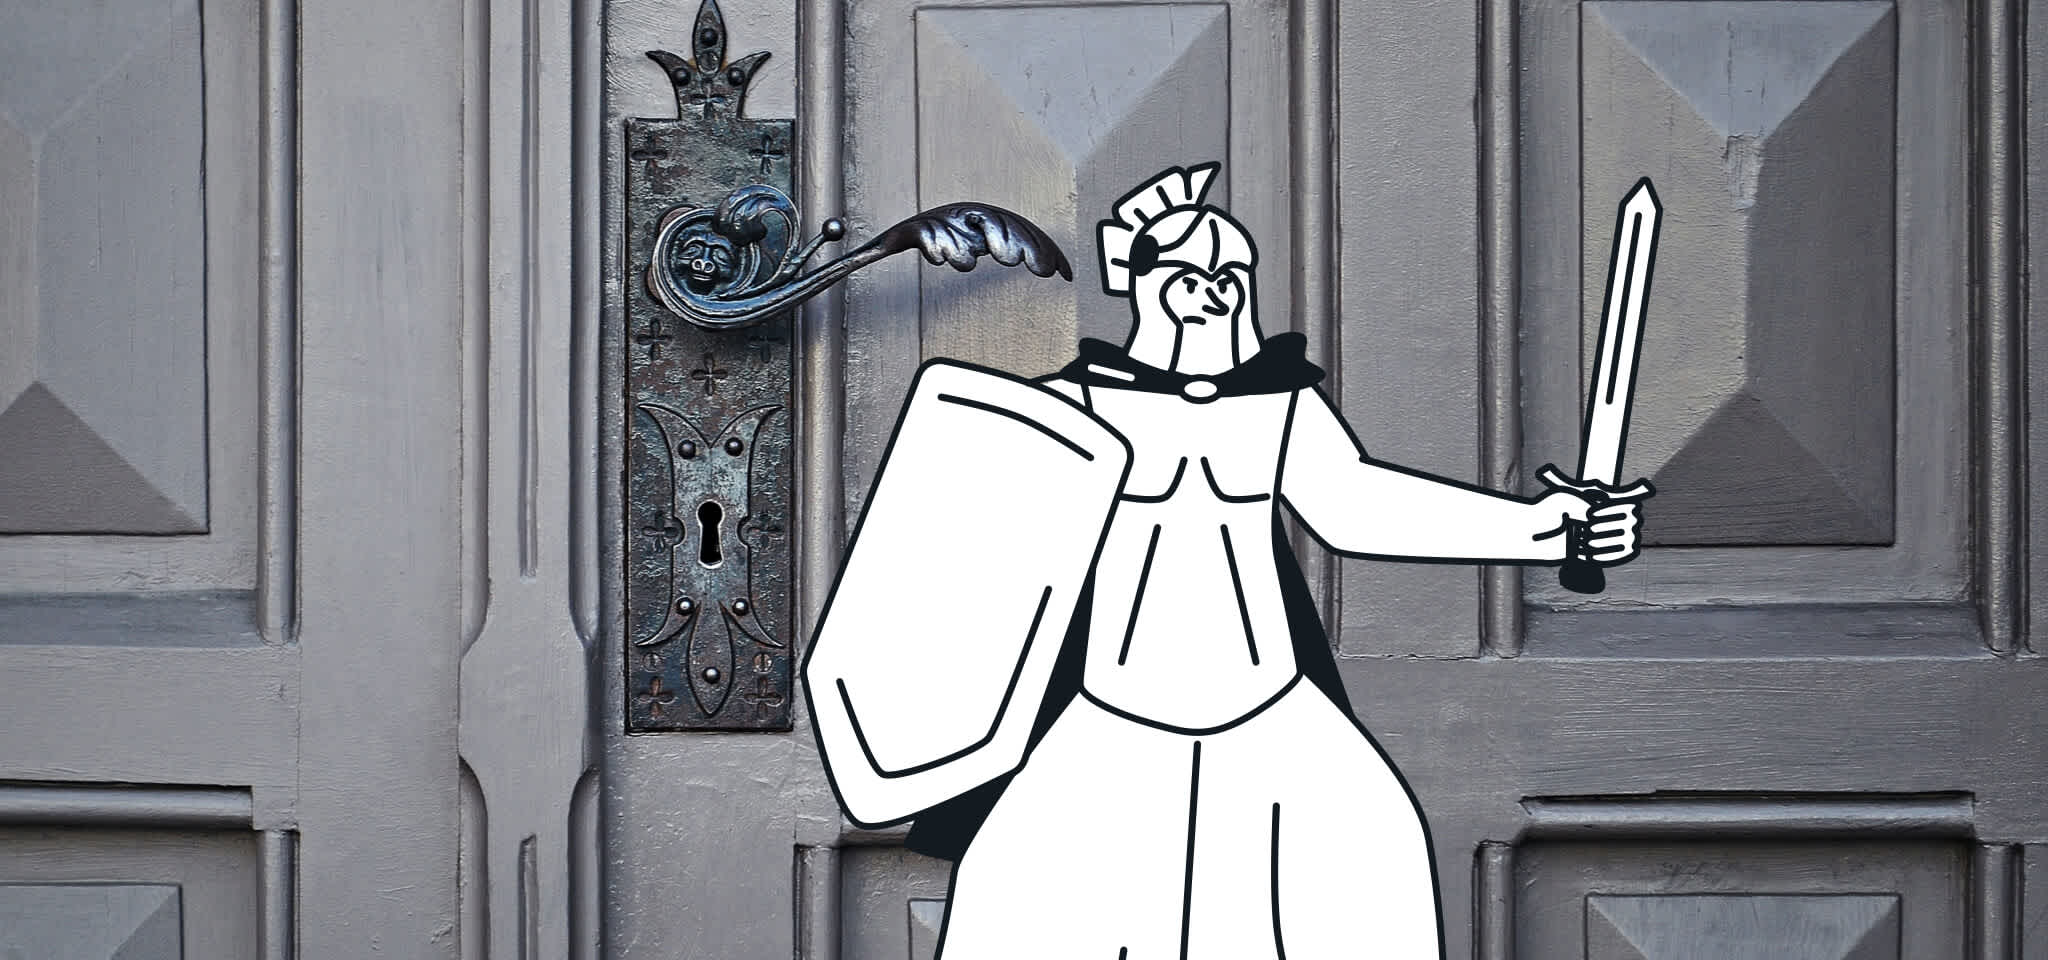 Hermes protegiendo la puerta